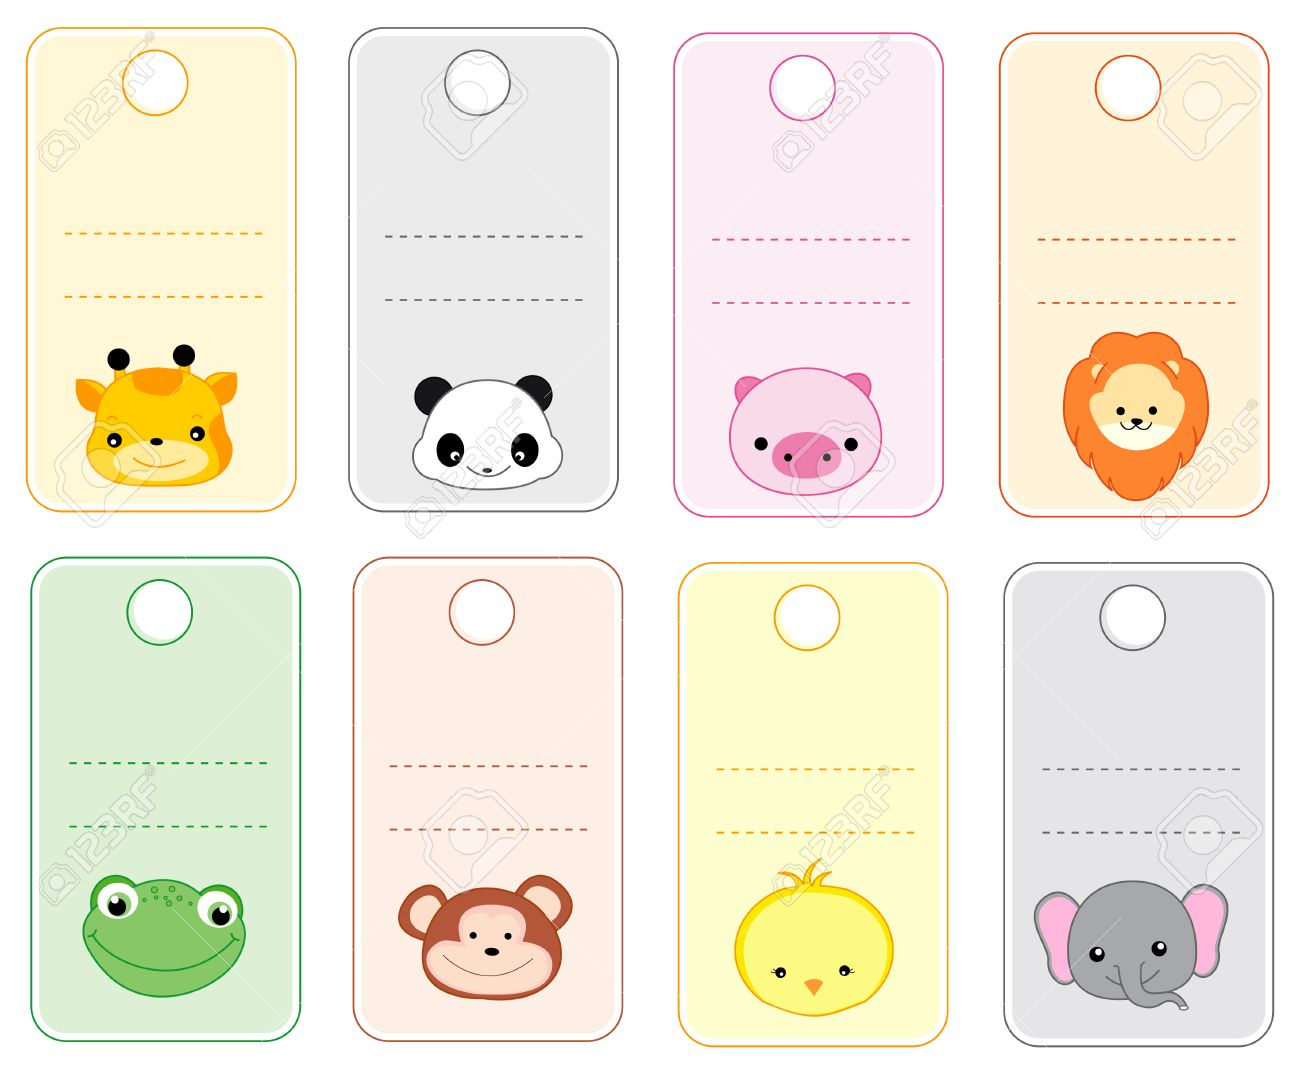 Colorful Printable Gift Tags / Name Tags With Cute Animal Faces - Free Printable Gift Name Tags